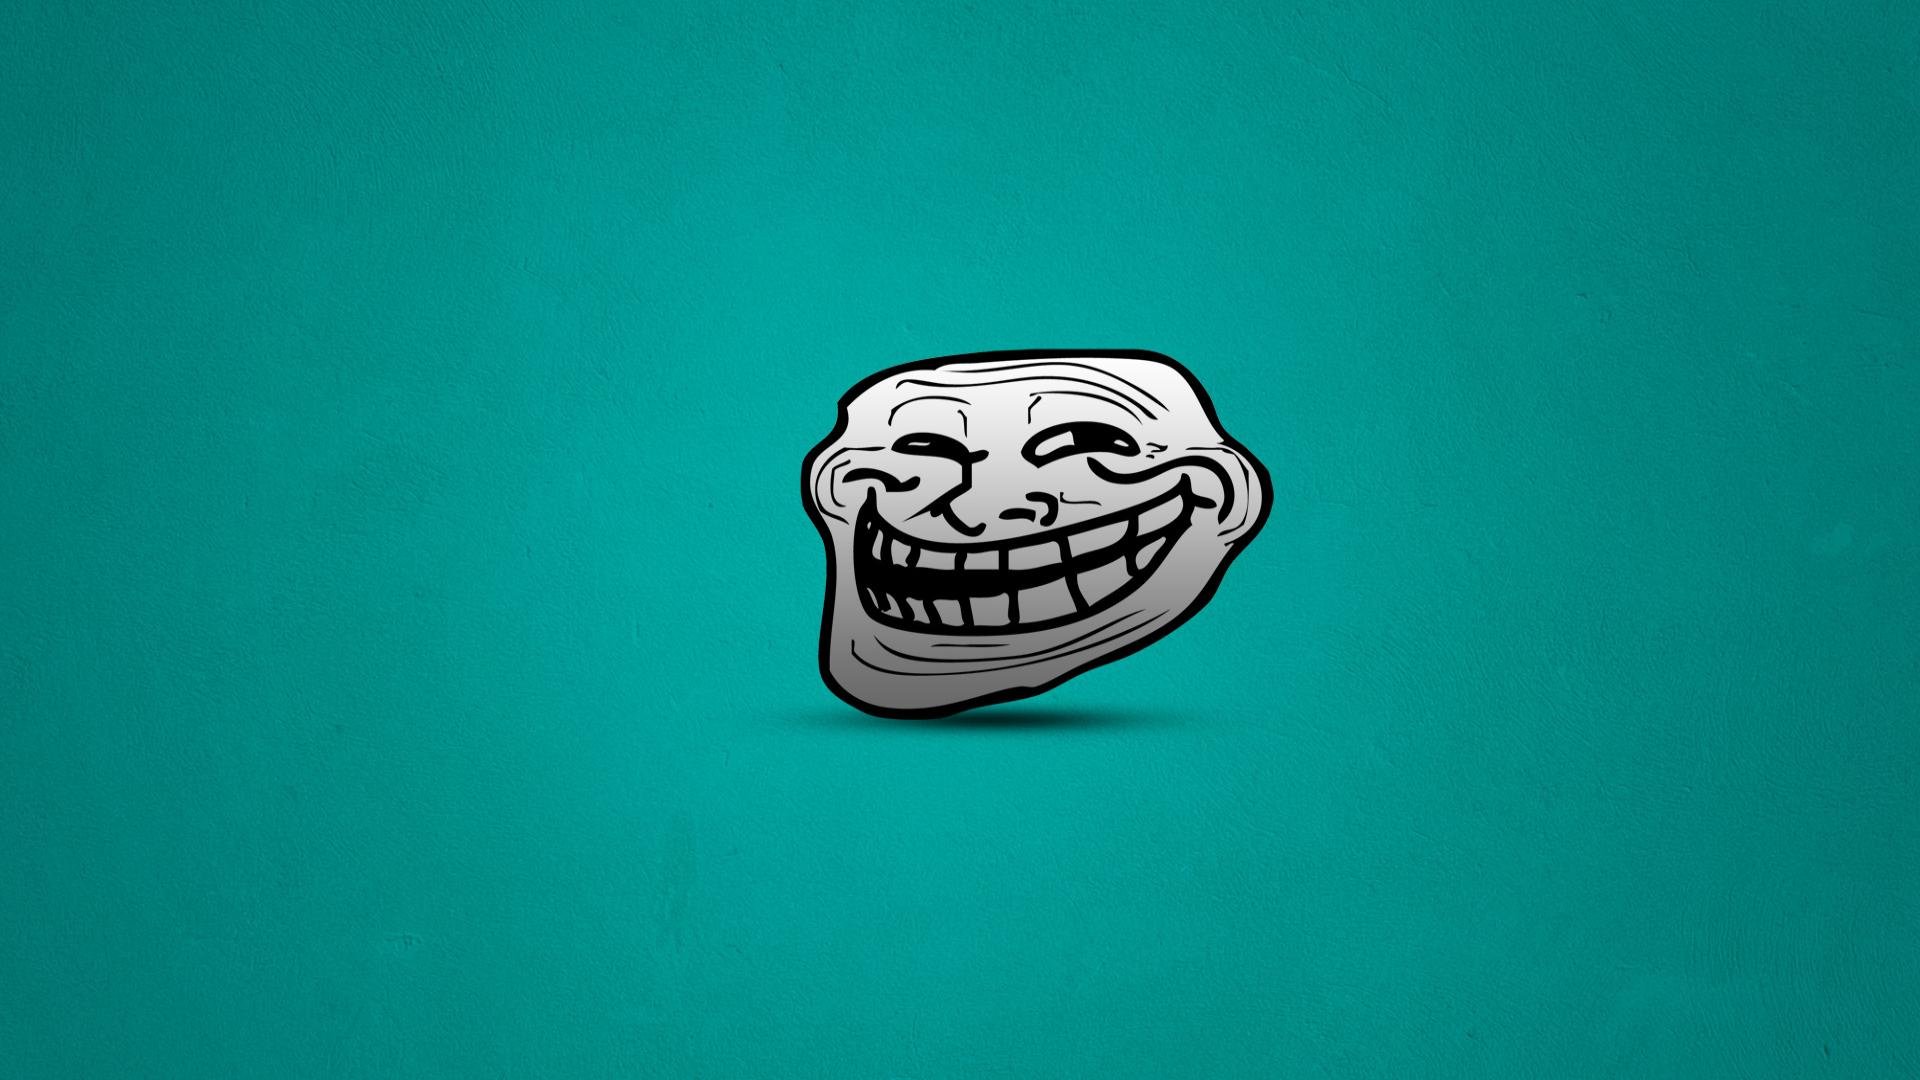 Best Troll Face wallpaper ID:464828 for High Resolution full hd computer